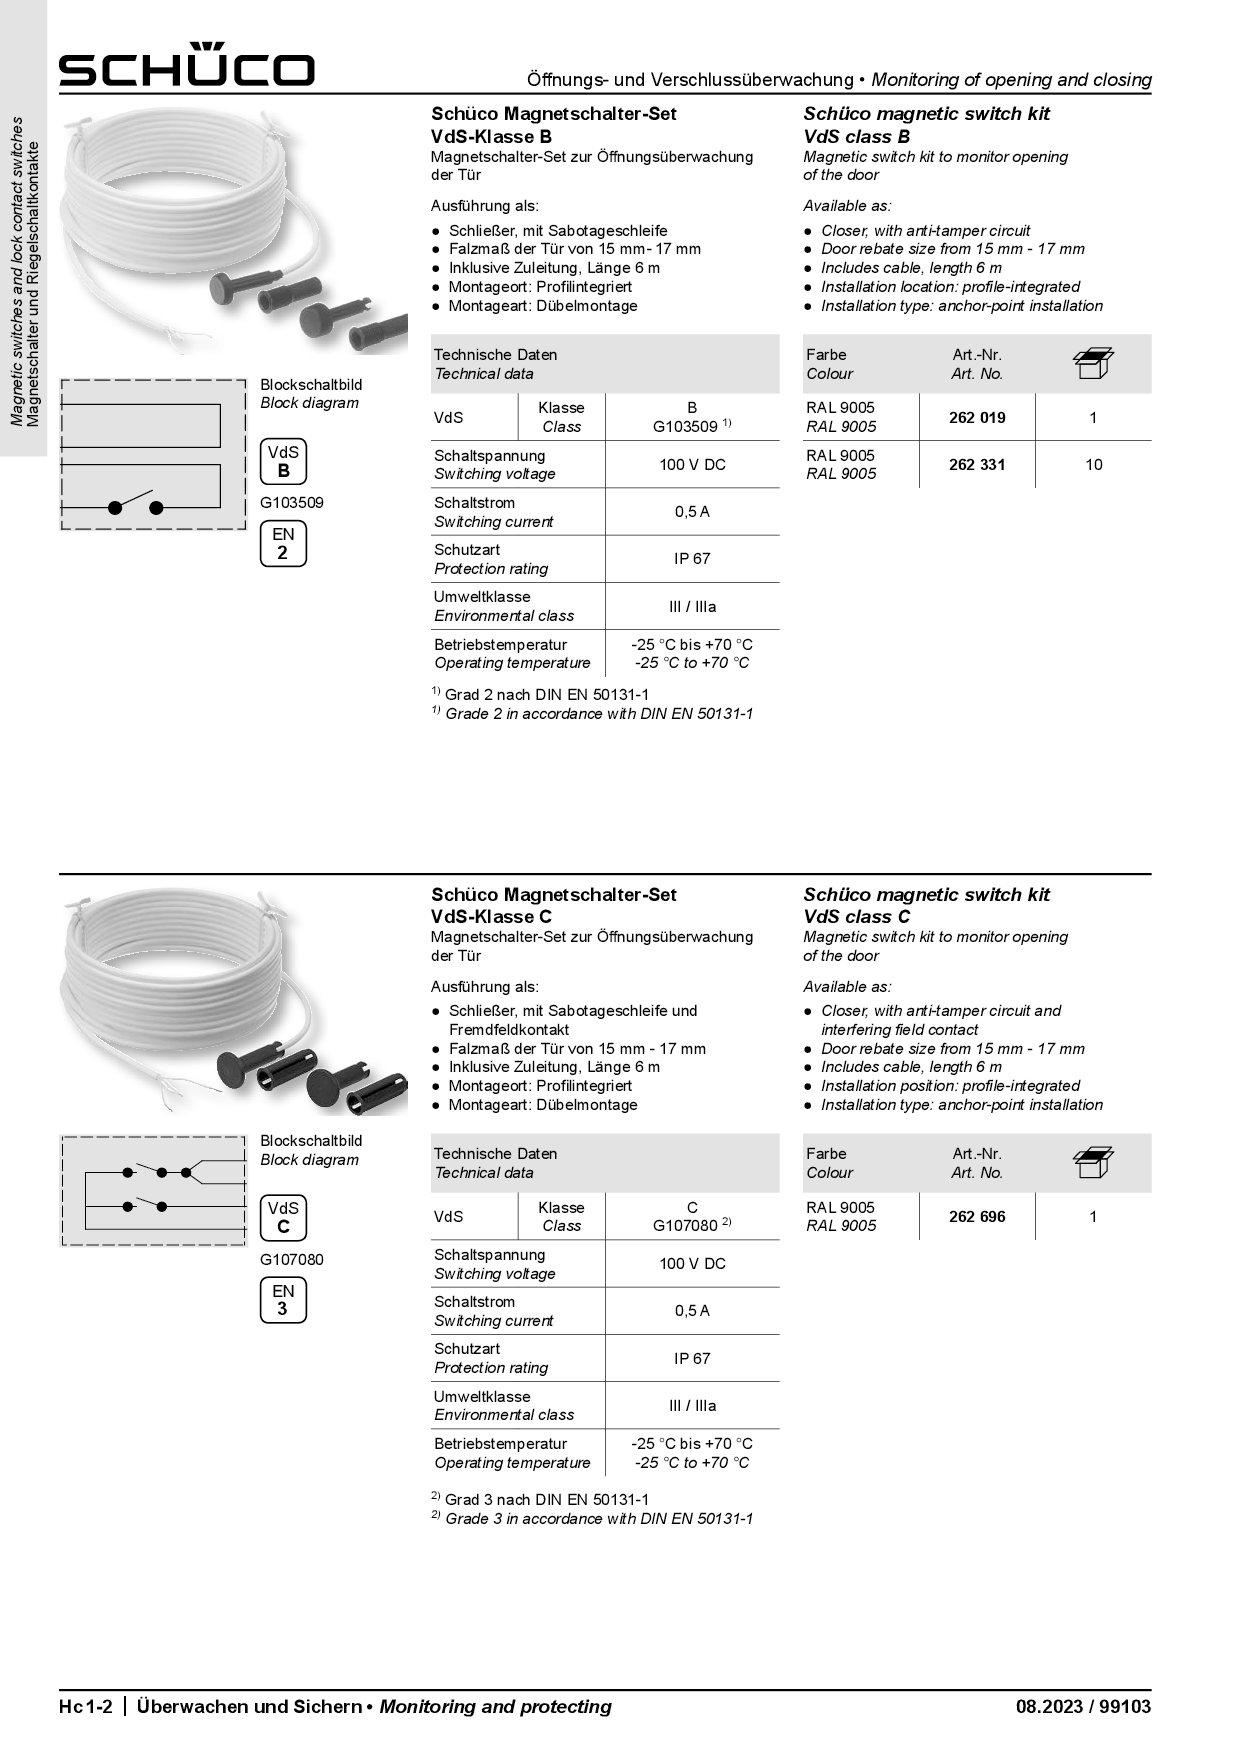 Schüco Magnetschalter-Set 262019, VdS-Klasse B